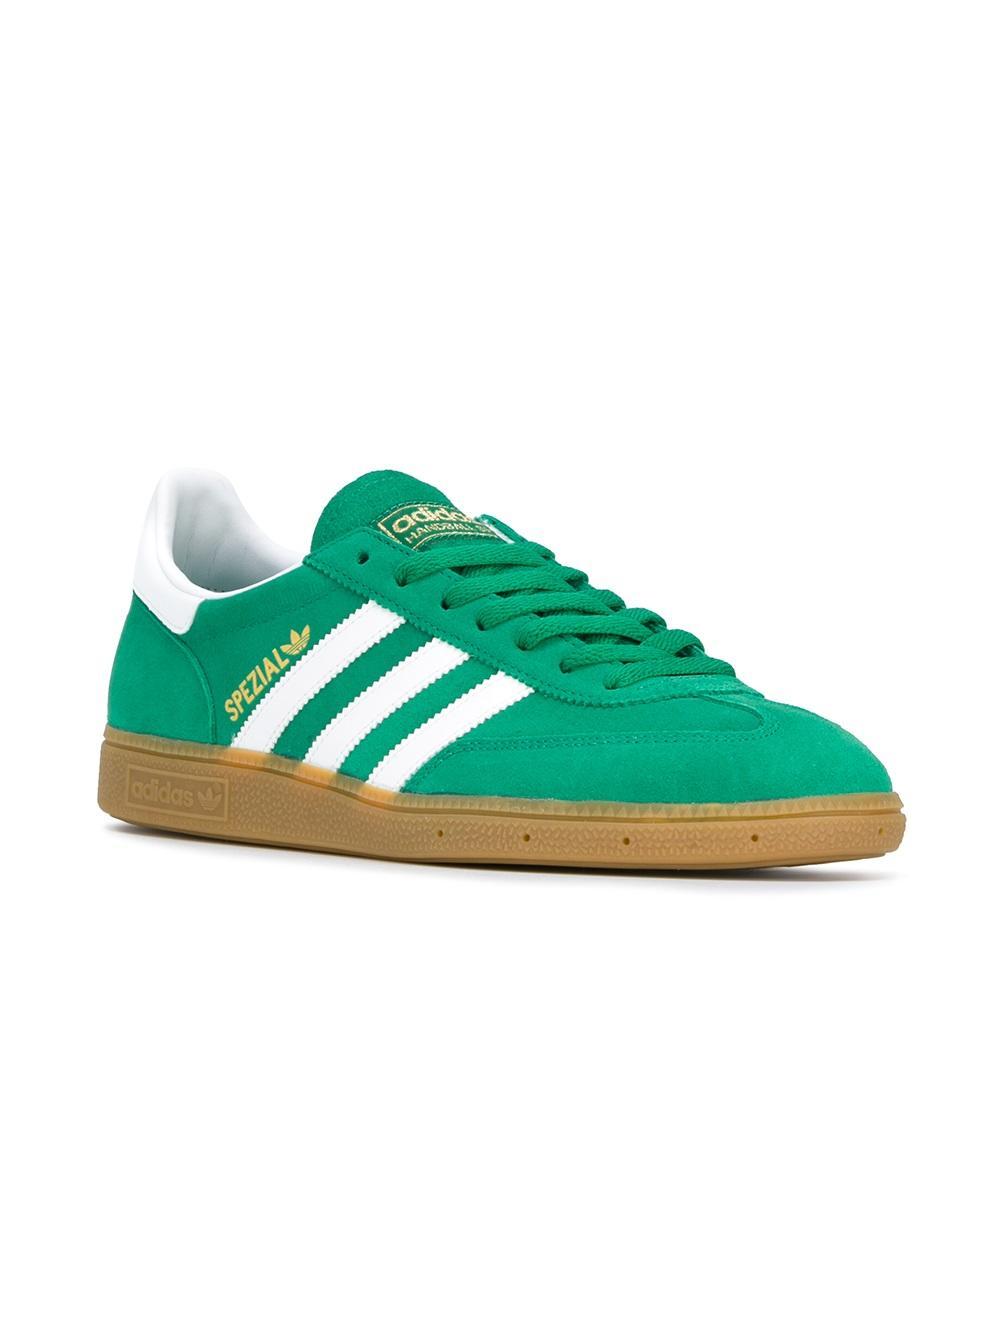 adidas Originals Leather 'handball Spezial' Sneakers in Green for Men ...